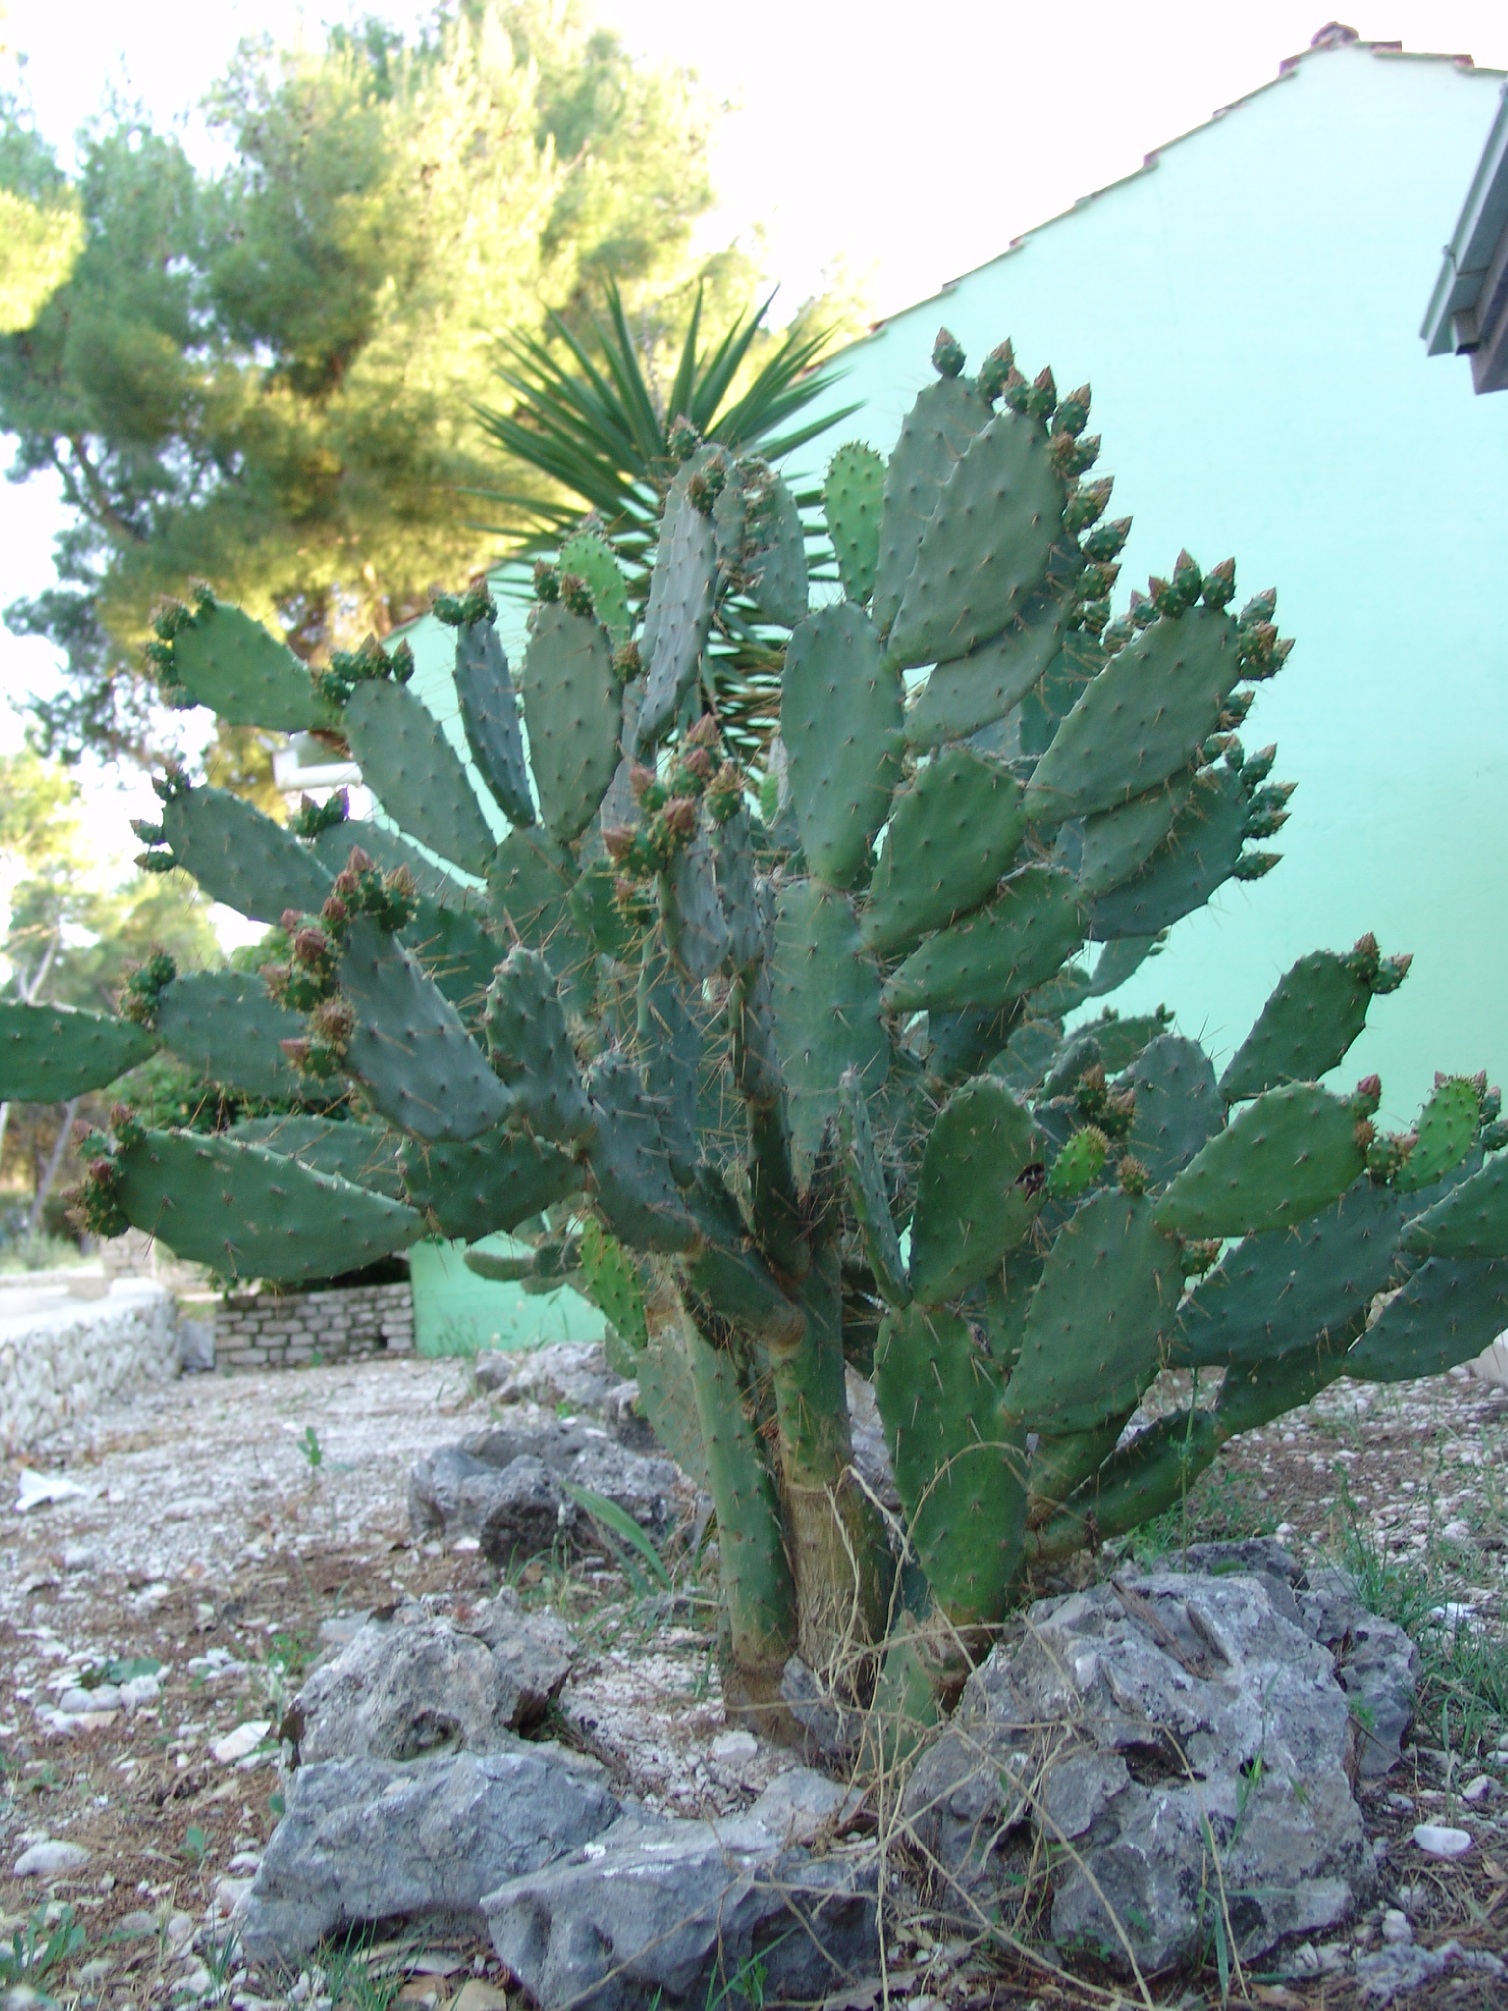 Xerophyllous cactus (Opuntia) in the Mediterranean photo by Gábor Varga